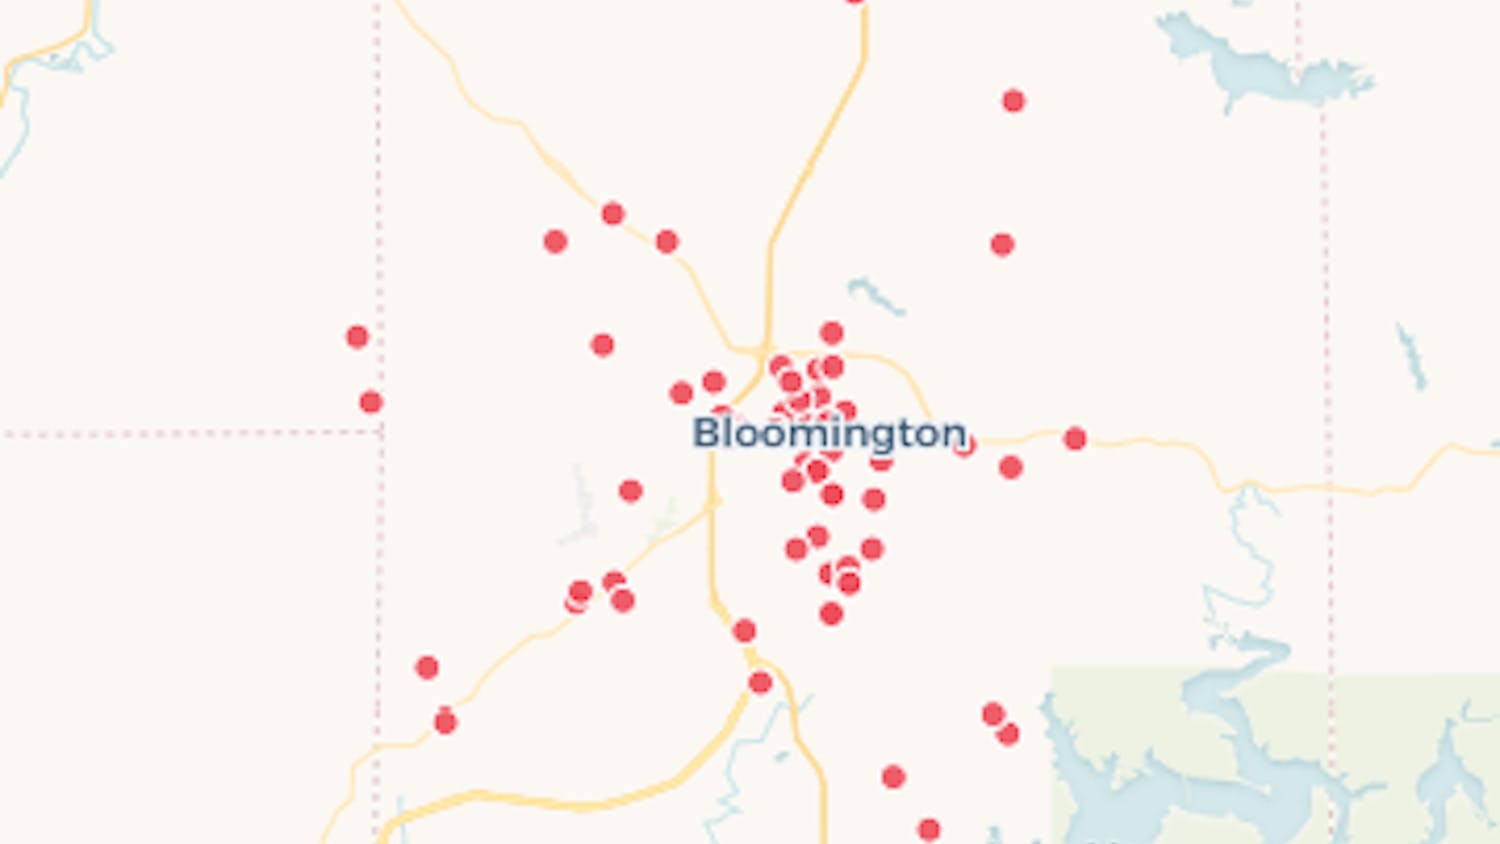 Bloomington lifetime sex offender registry.png